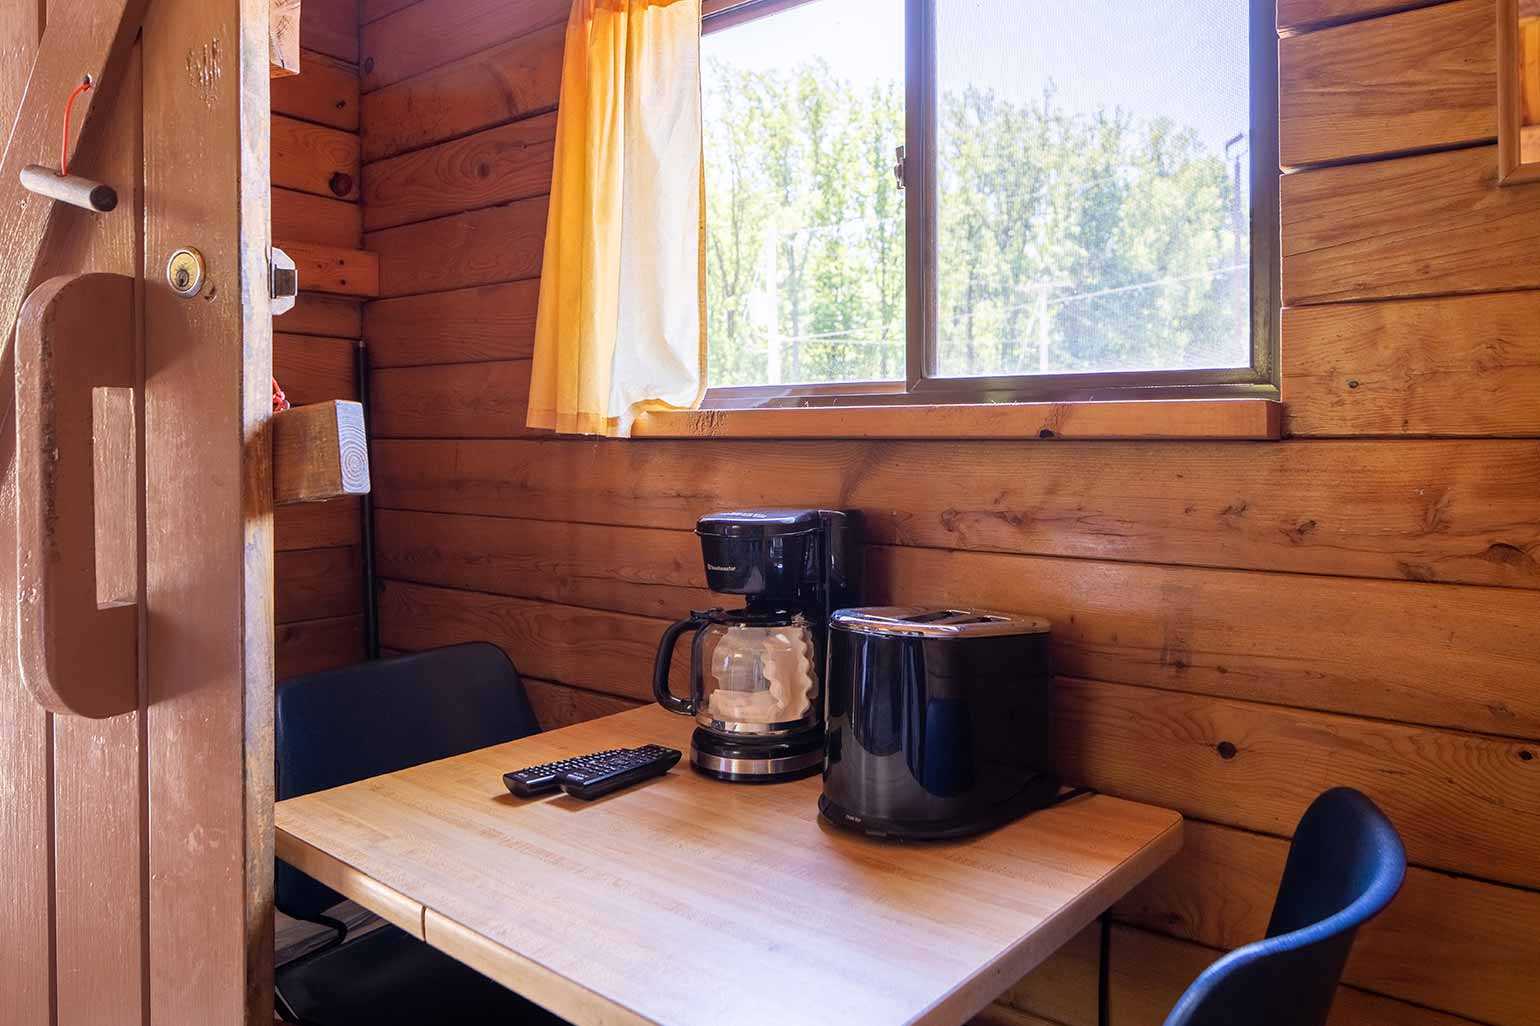 2-Room Rustic Cabins